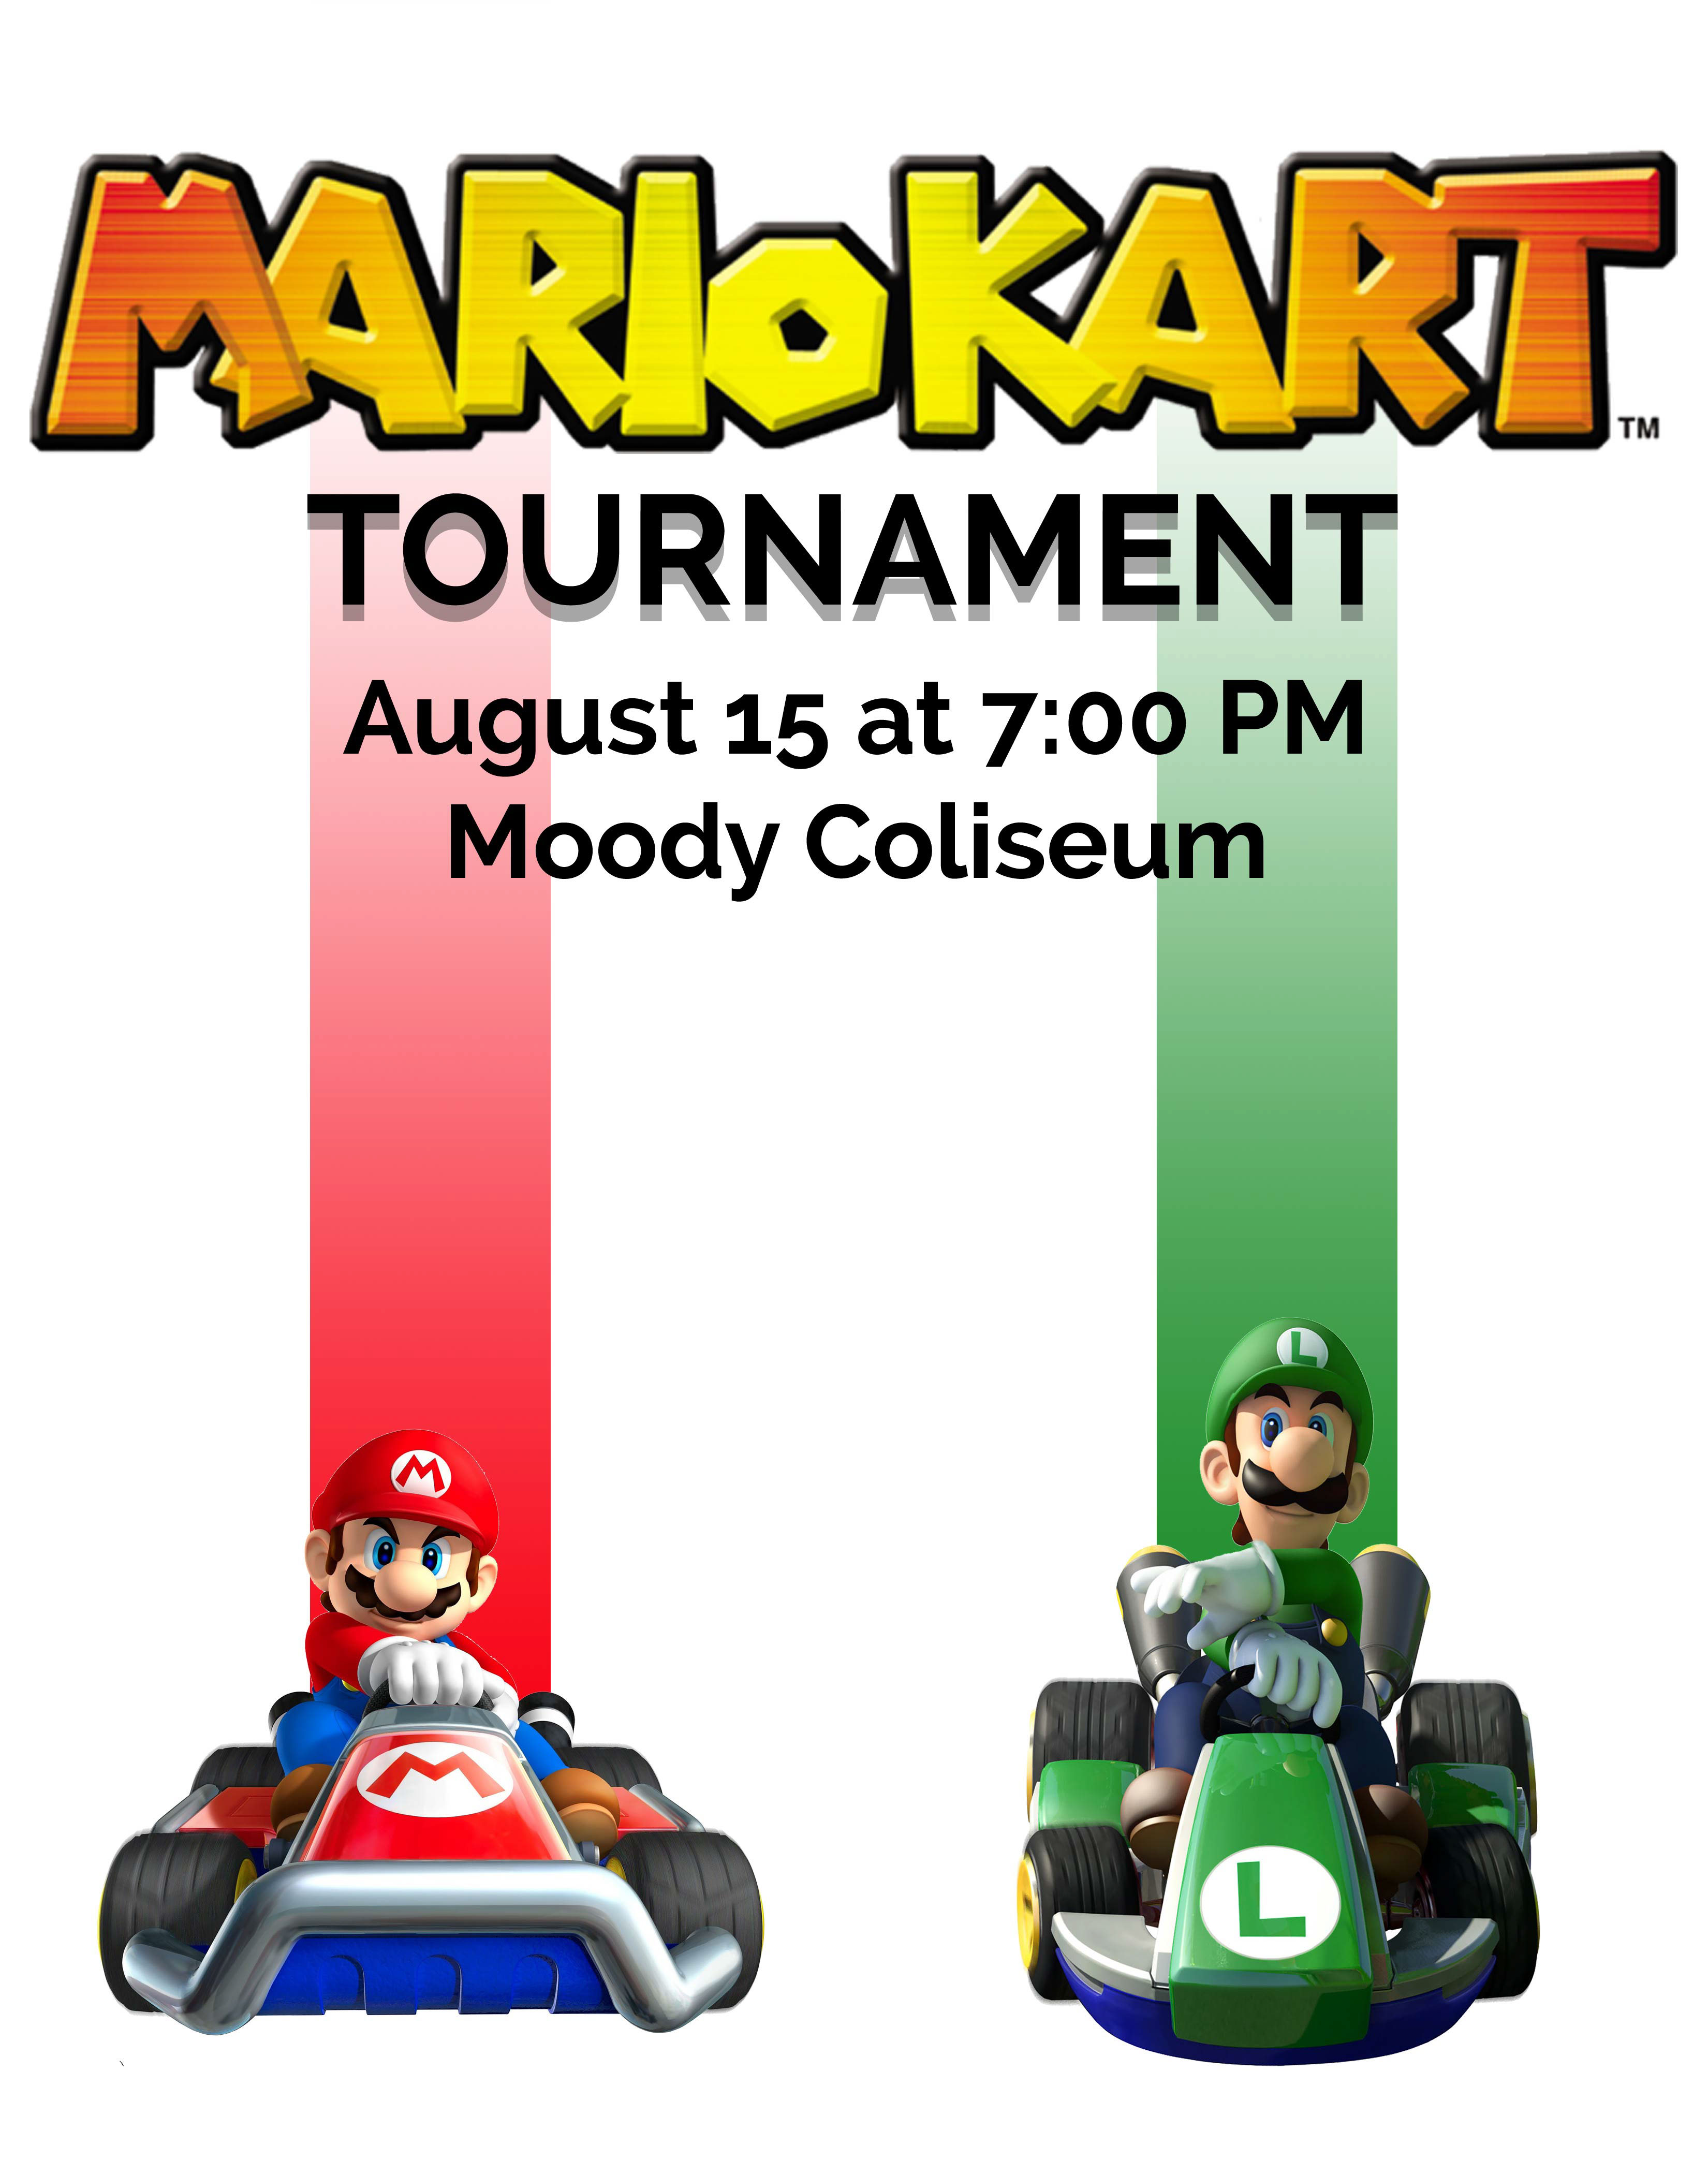 Mario Kart Tournament on Behance